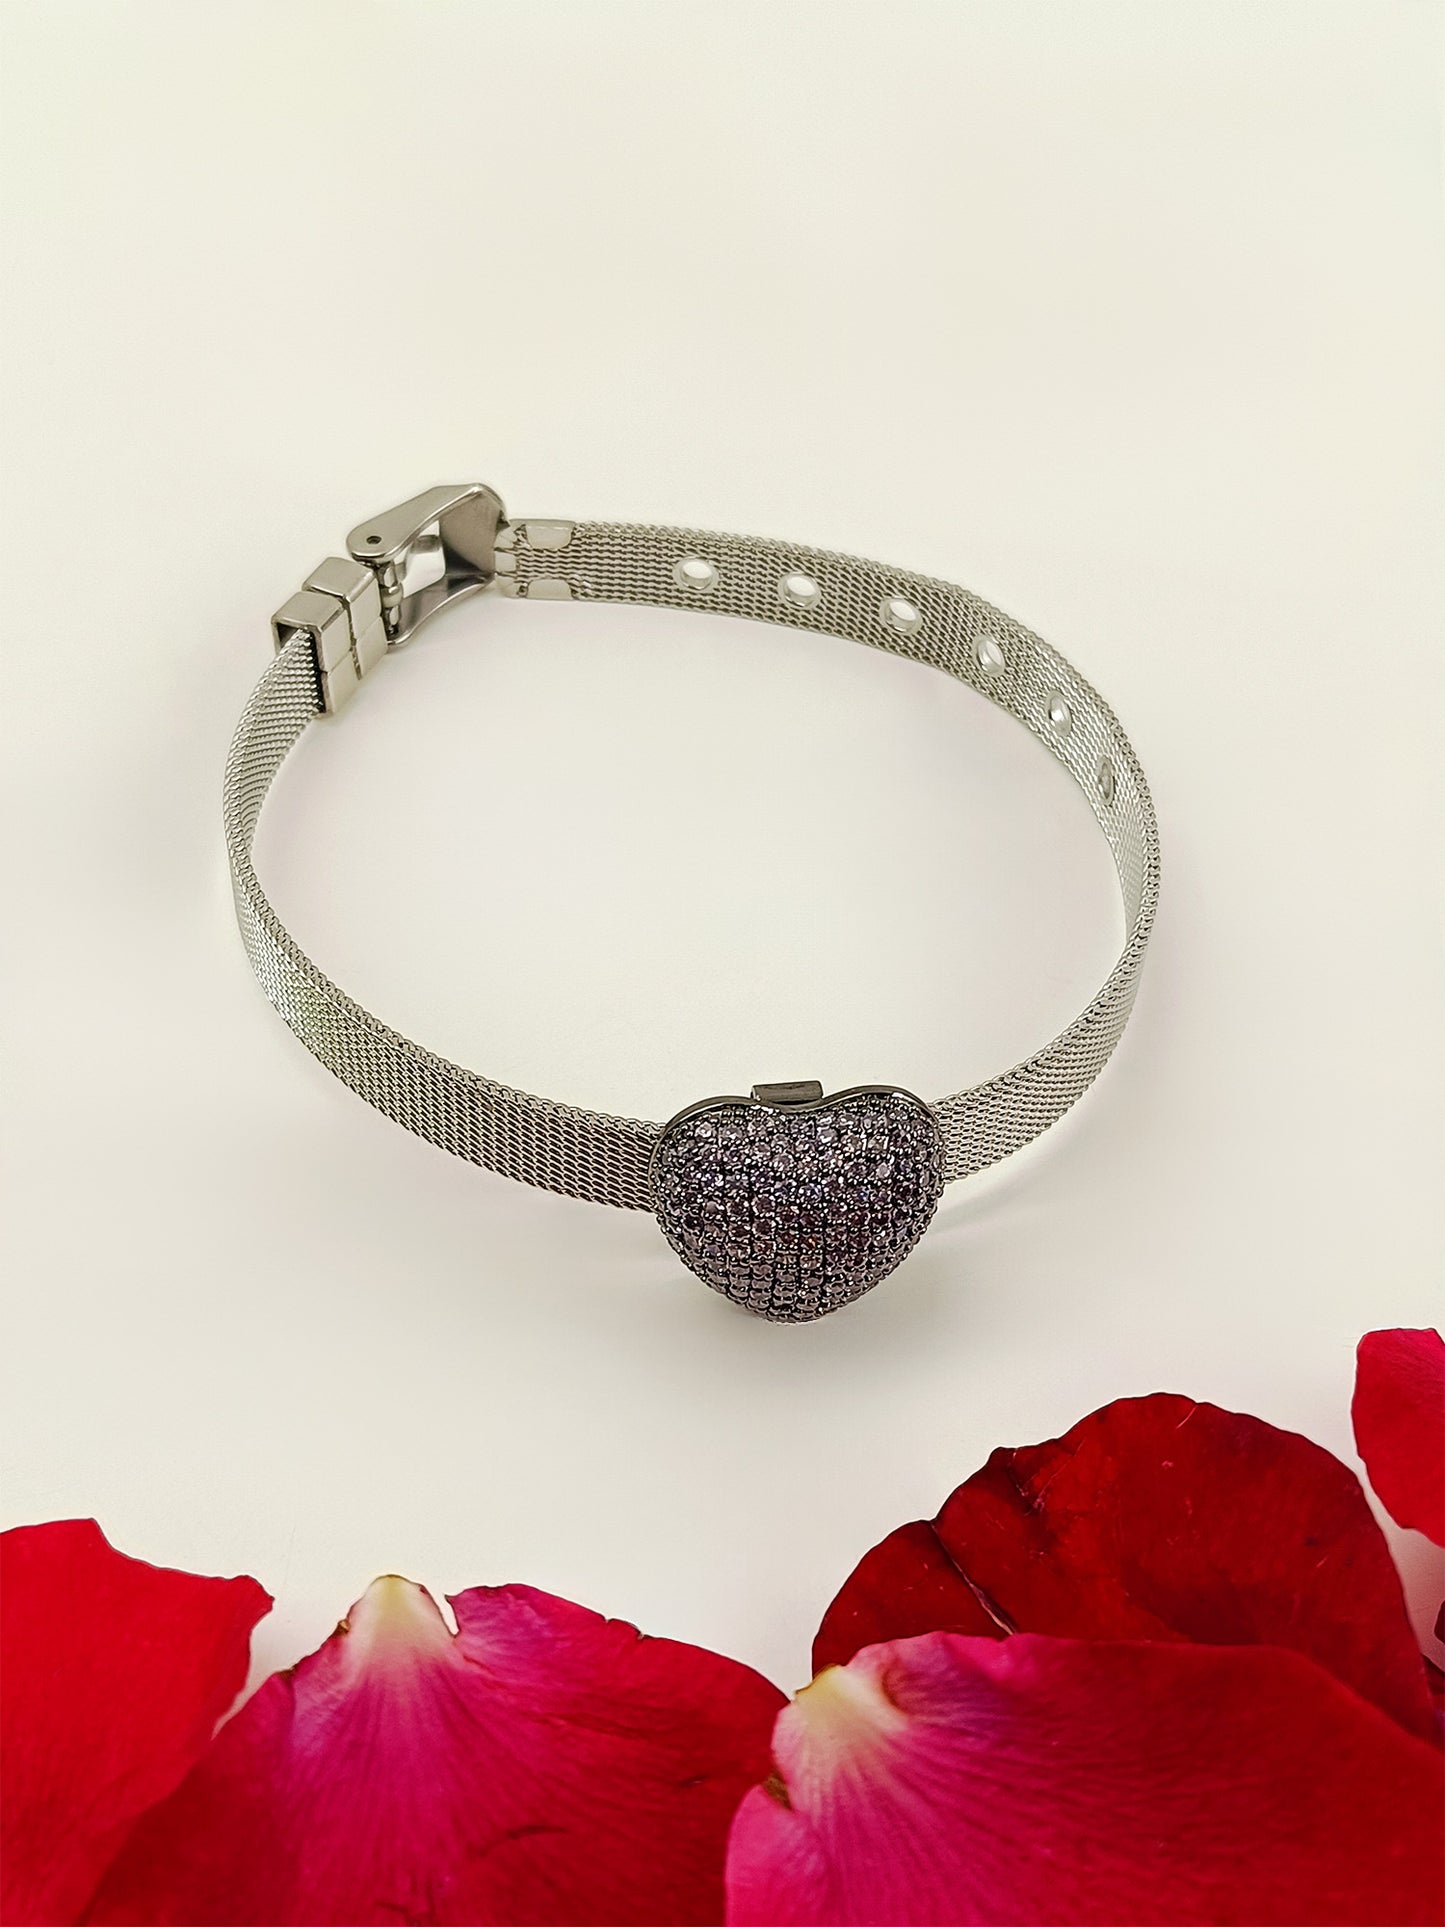 Rish Lavender Heart Shape Victorian Bracelet